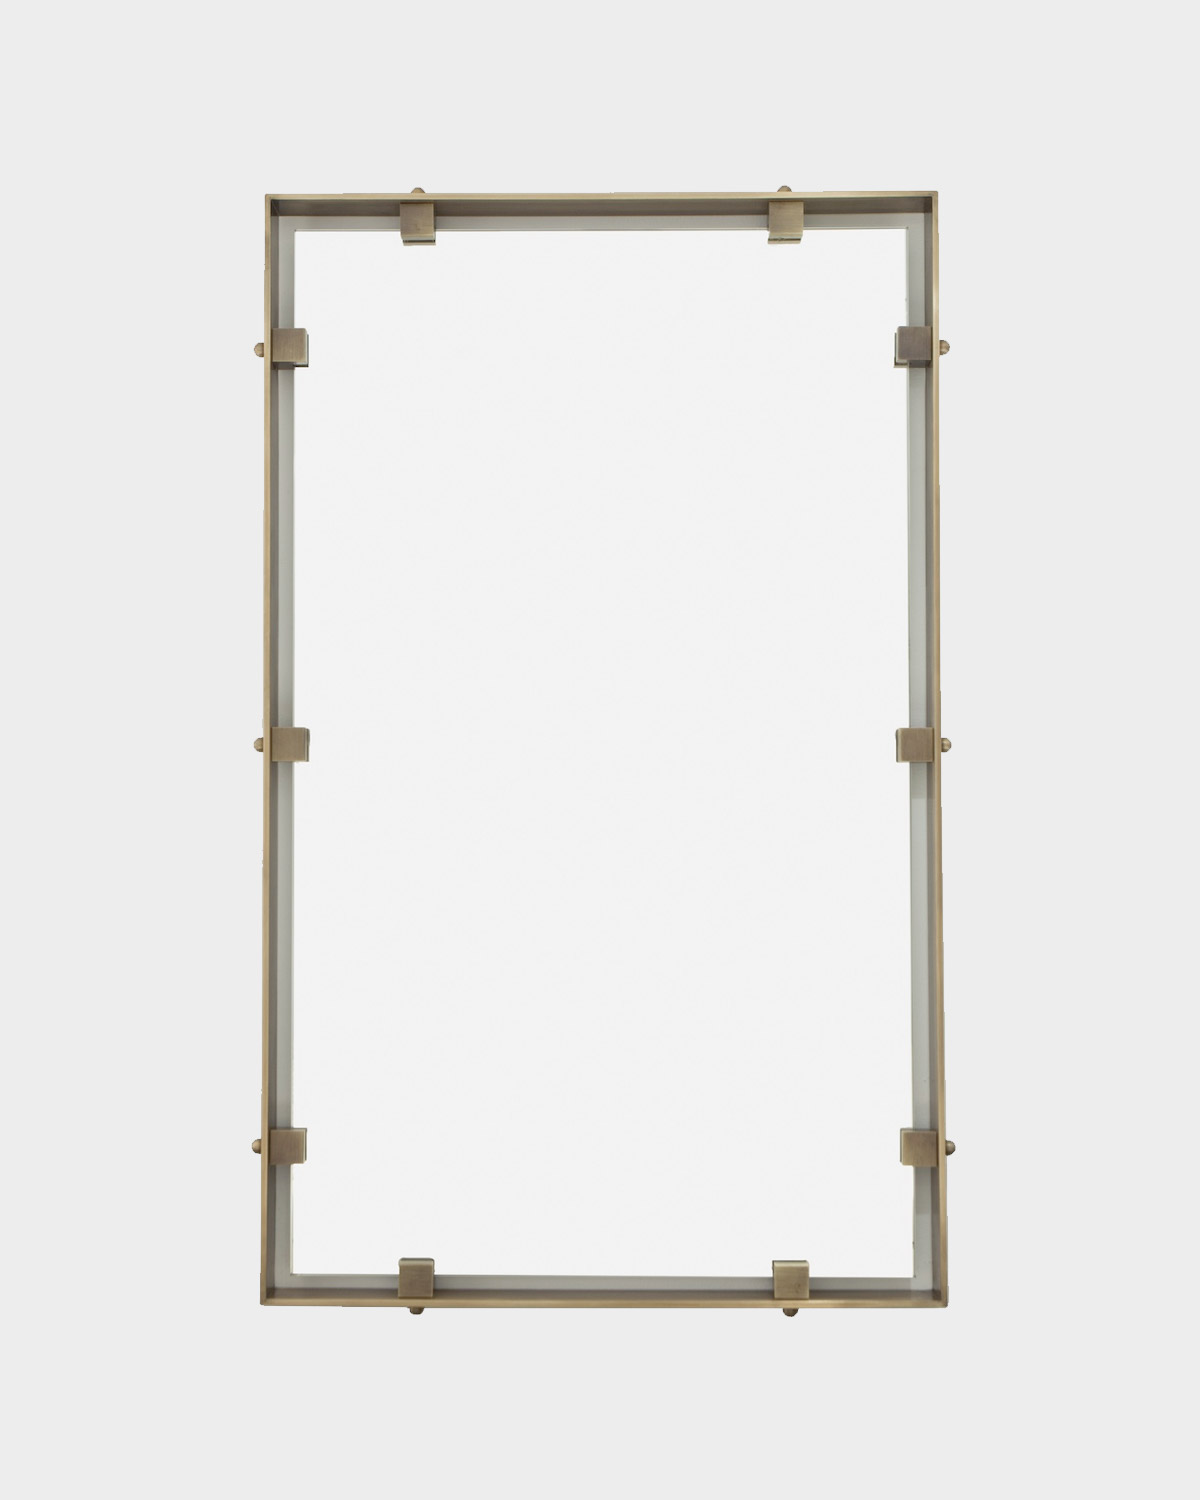 The Rectangular Dylan Wall Mirror by Studio Van den Akker